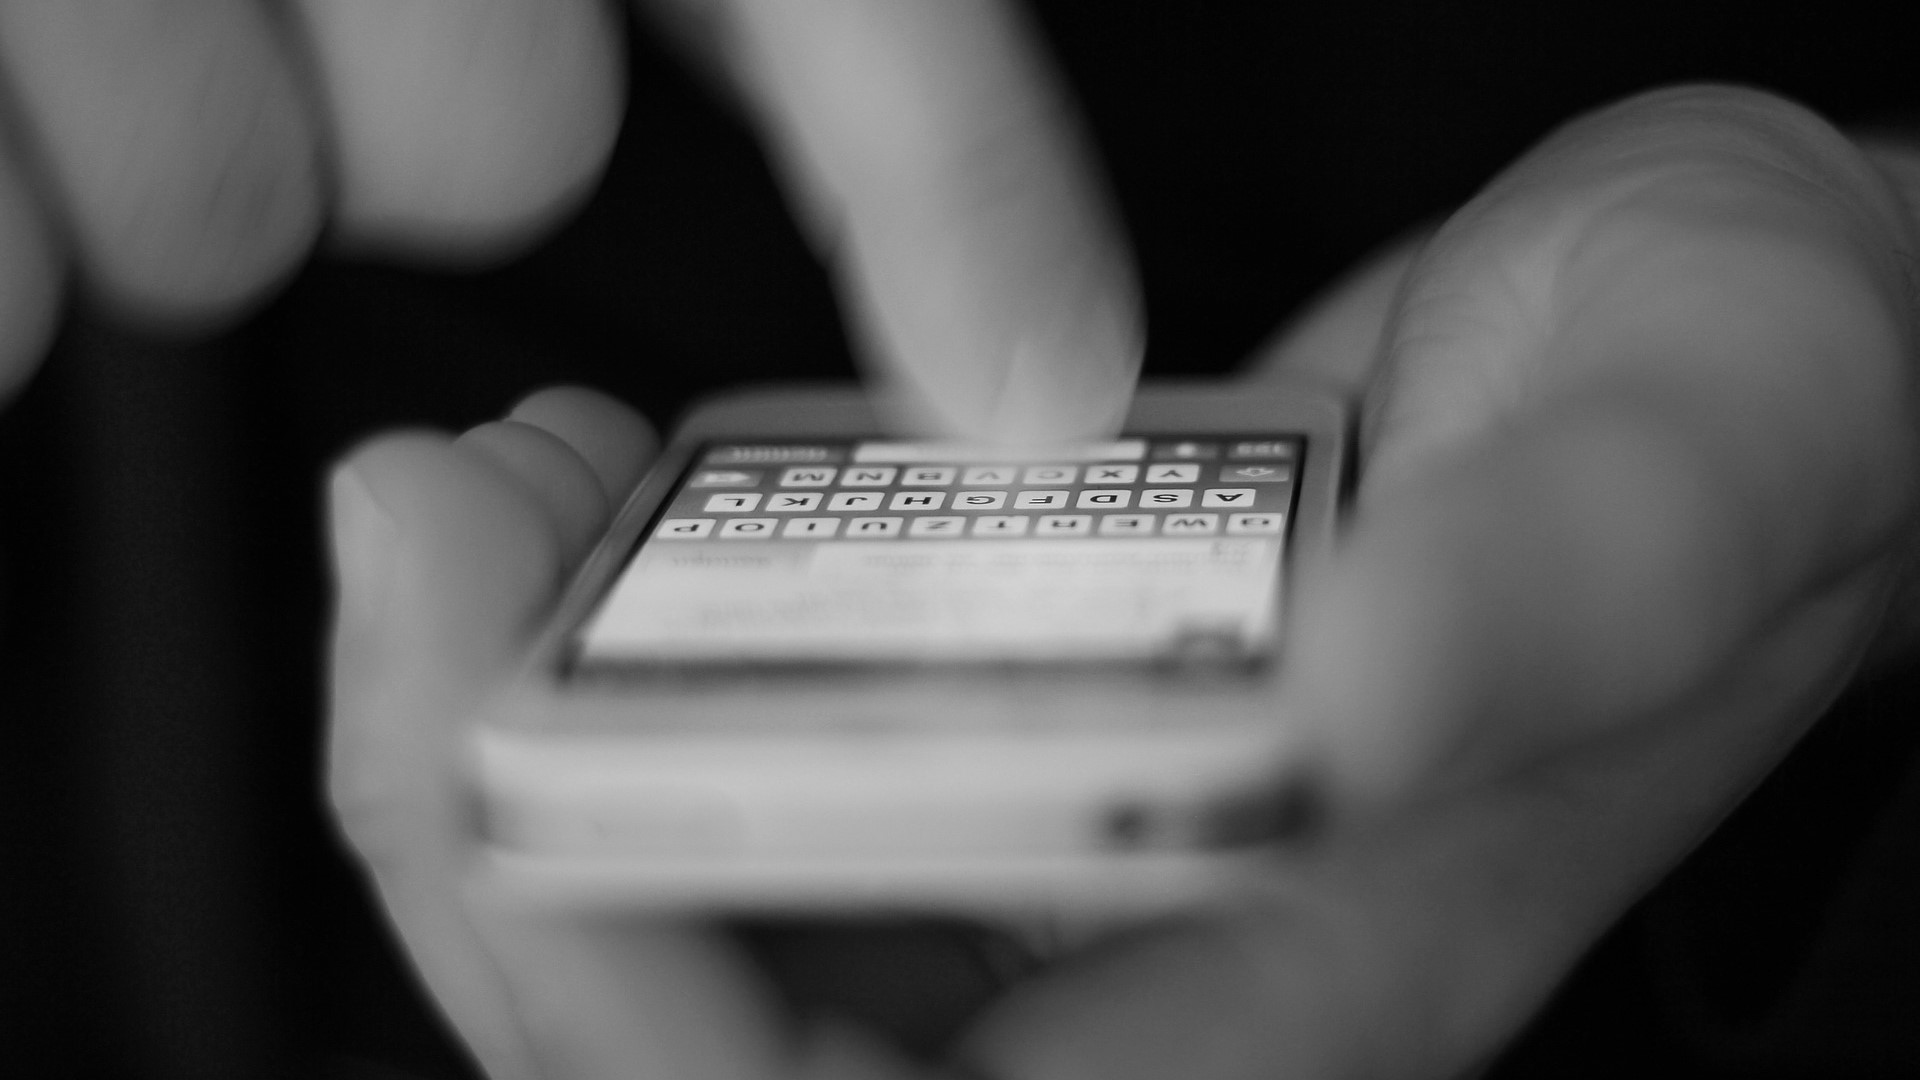 sms telefon - Image by relexahotels on Pixabay 